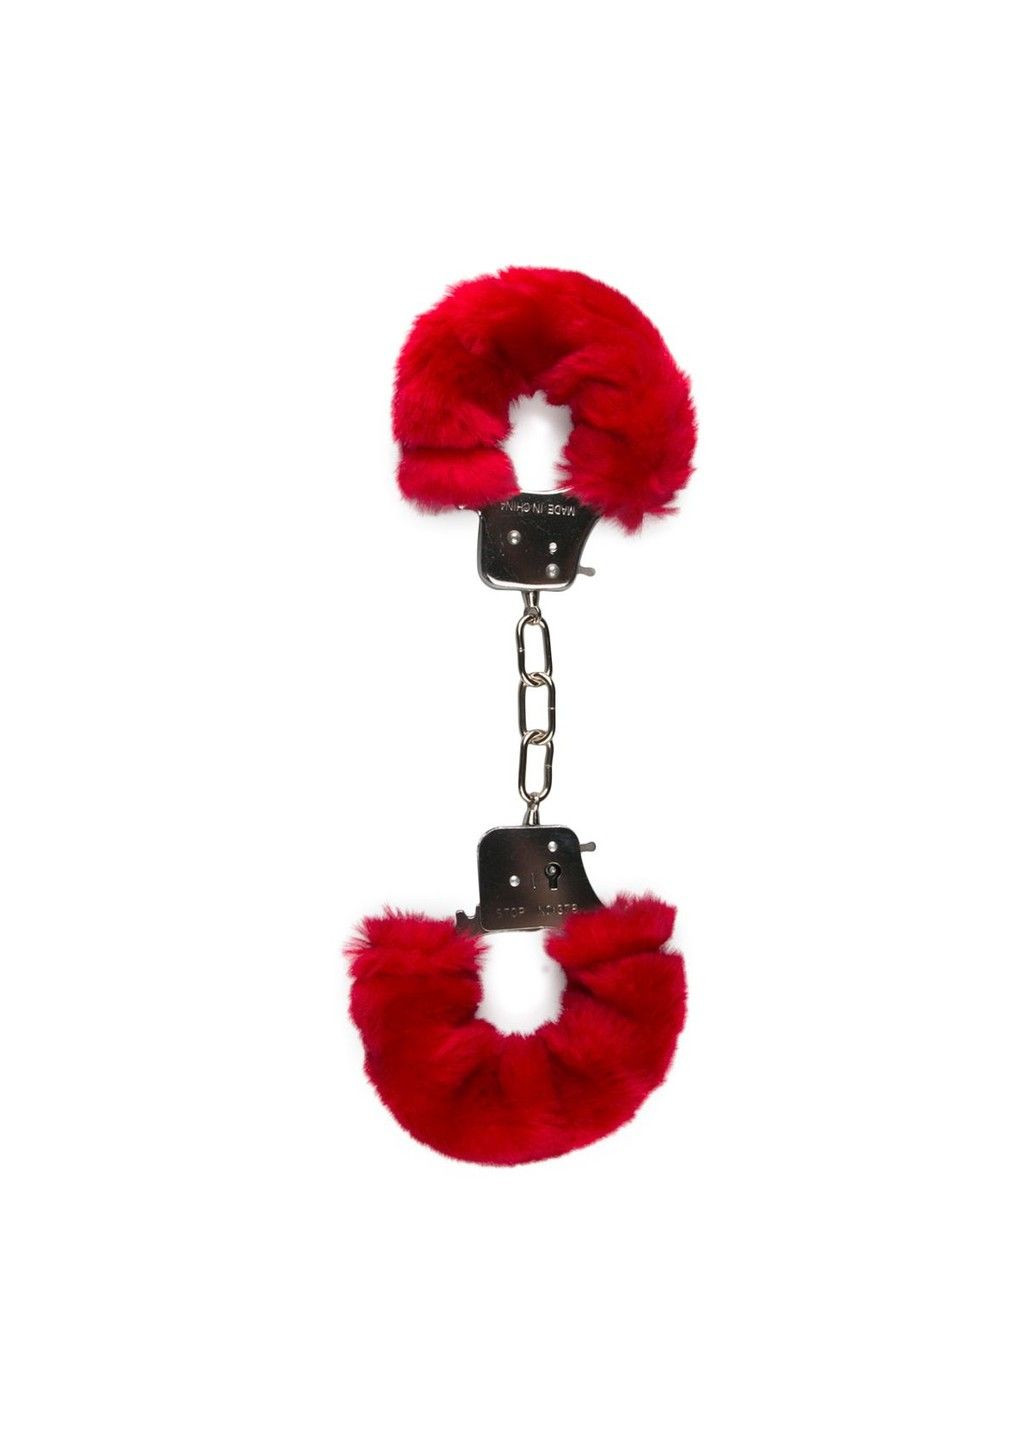 Наручники  Furry Handcuffs - Red EasyToys (290850856)